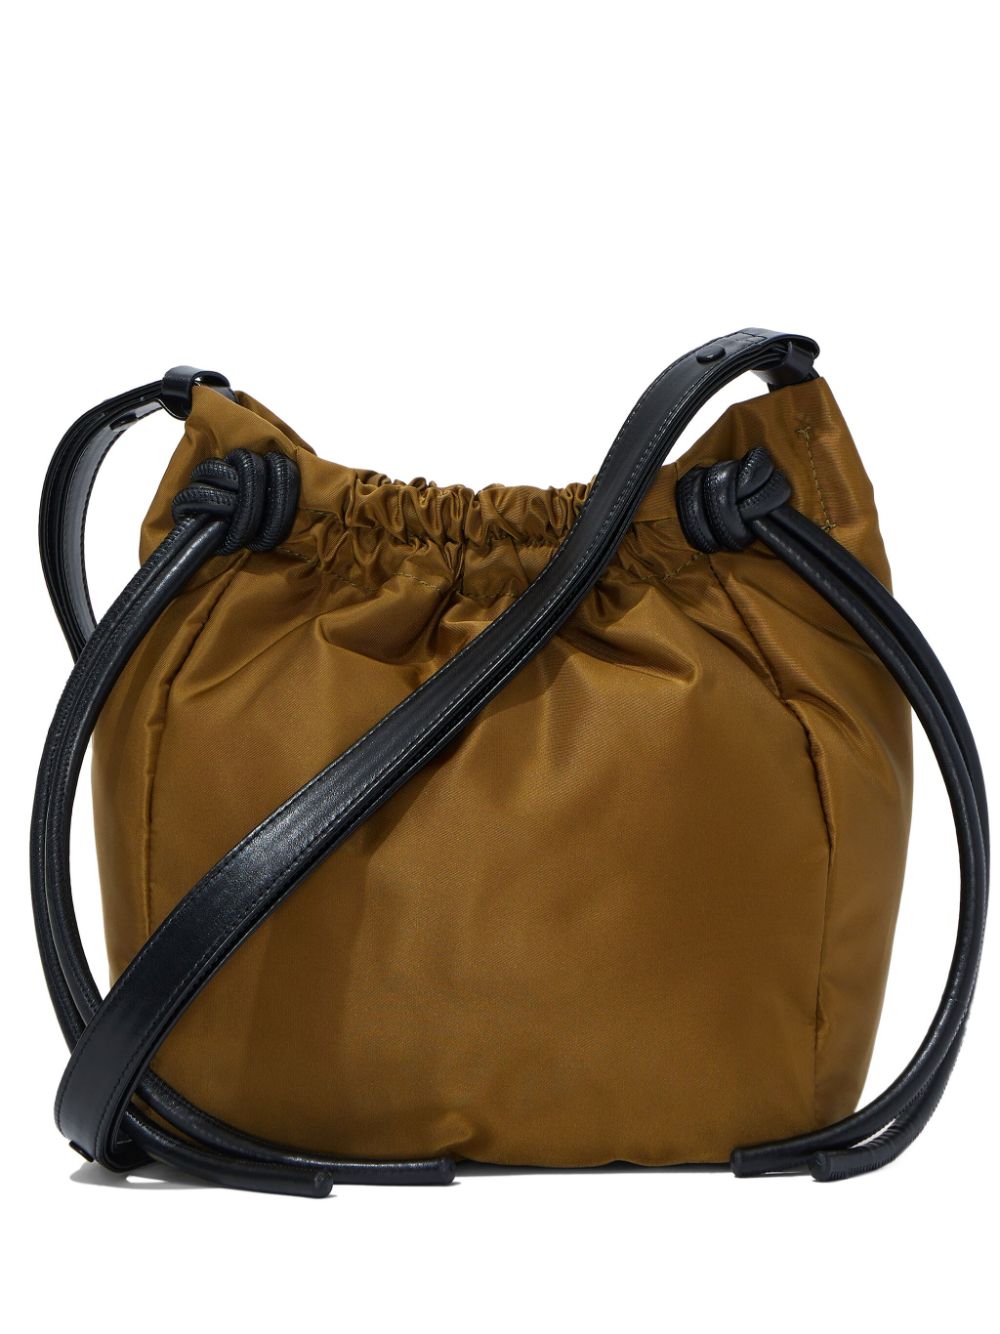 Drawstring pouch bag